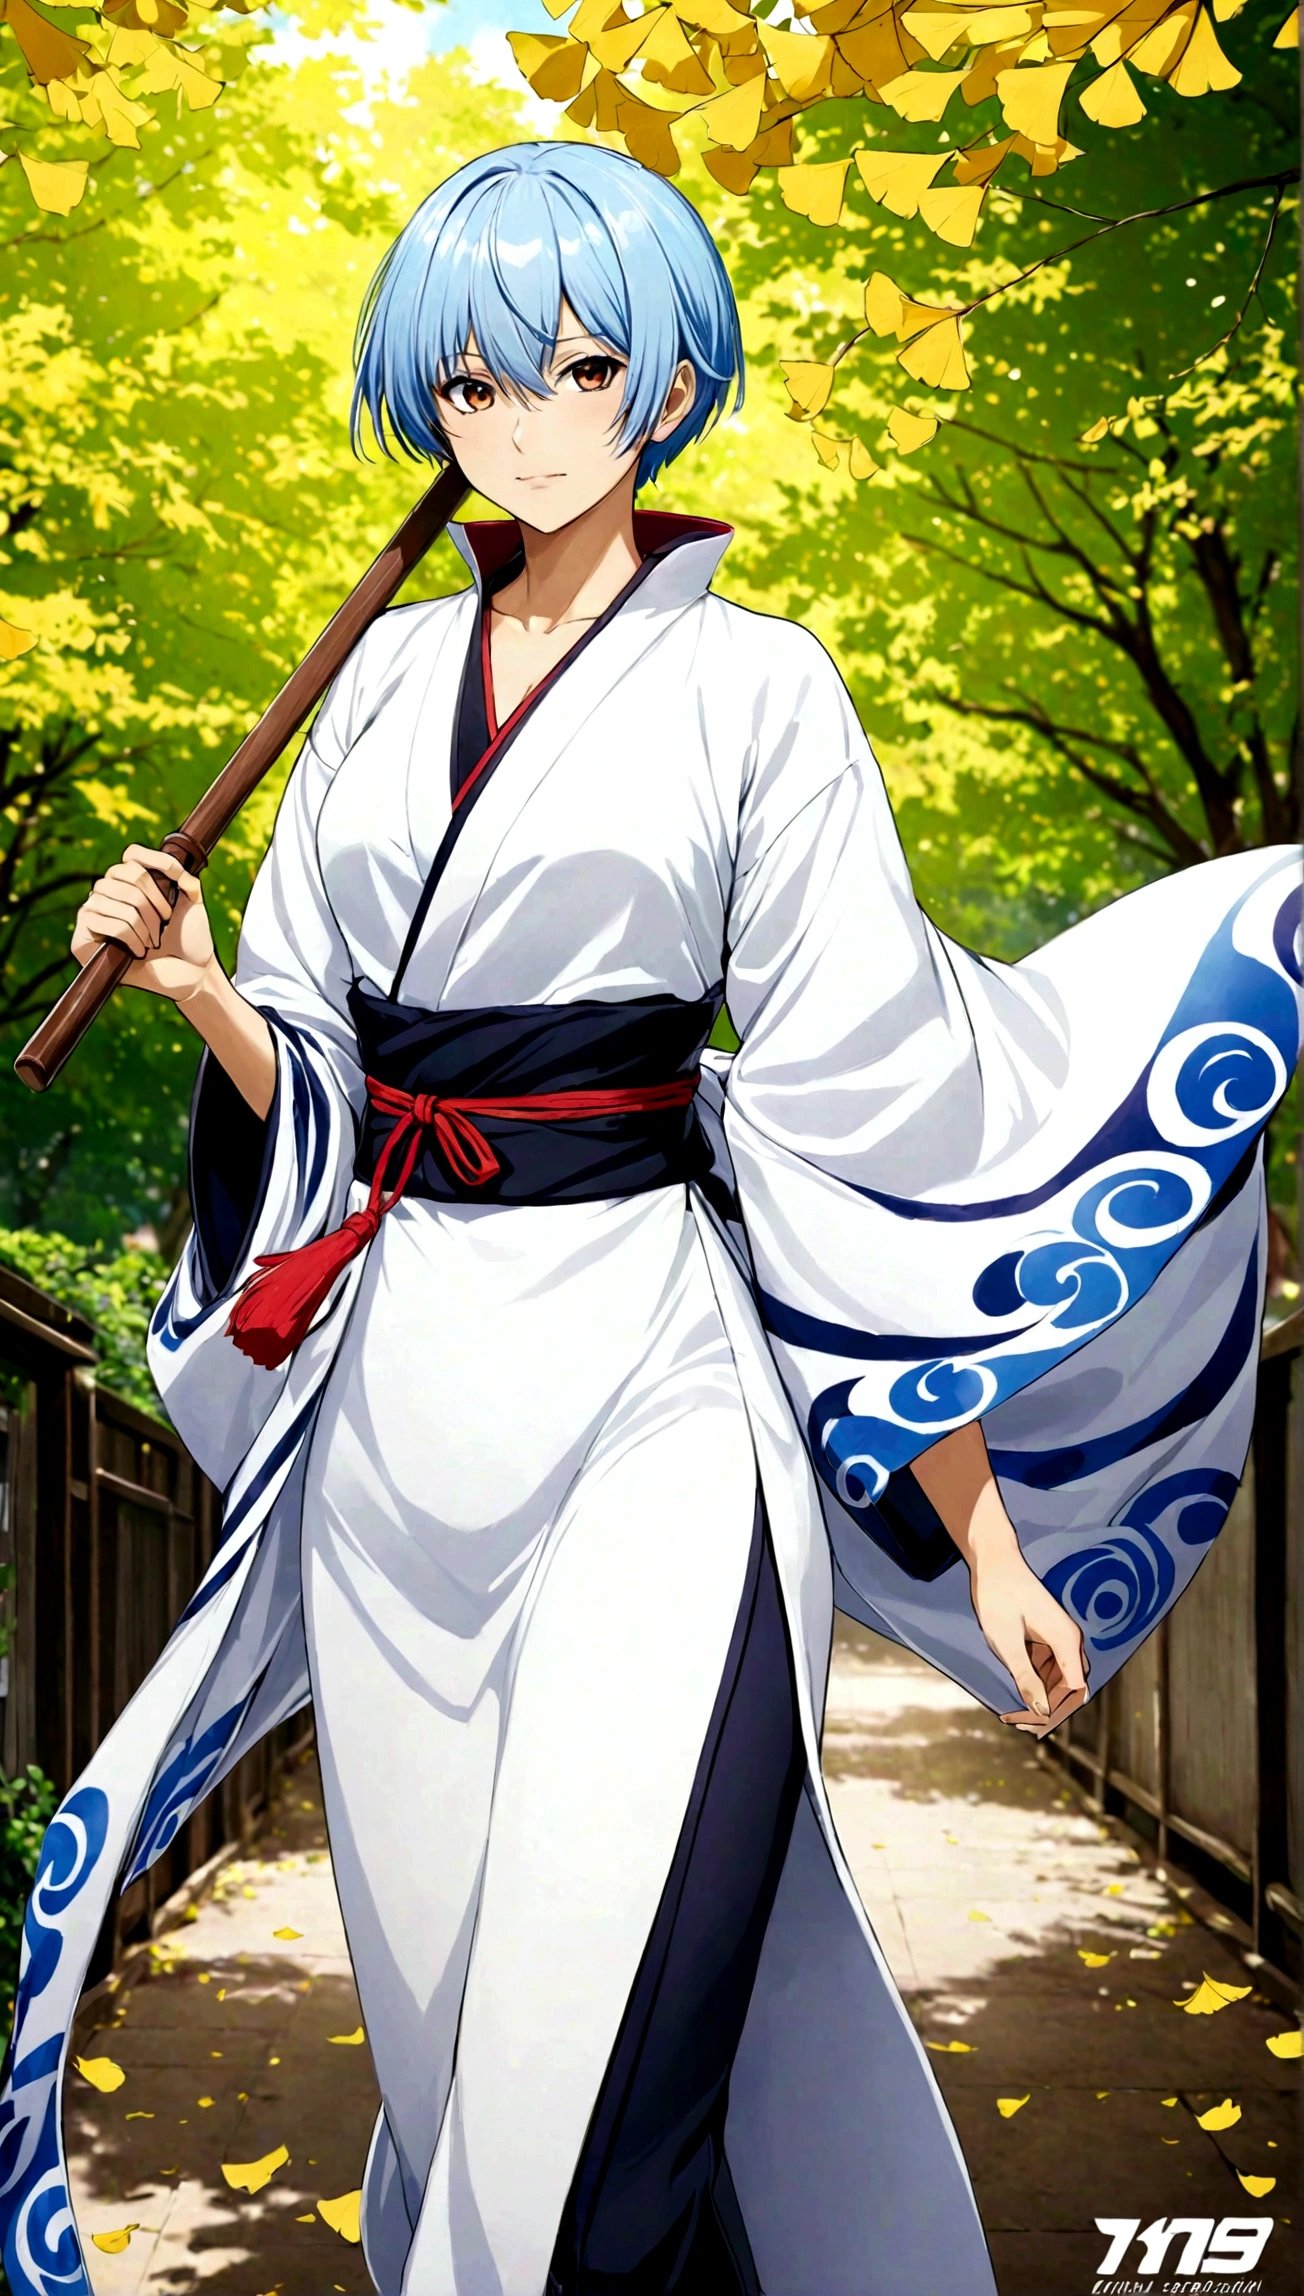 masterpiece, best quality, detailed, Gintama, 1 Girl, Ginko Sakata, outdoor,